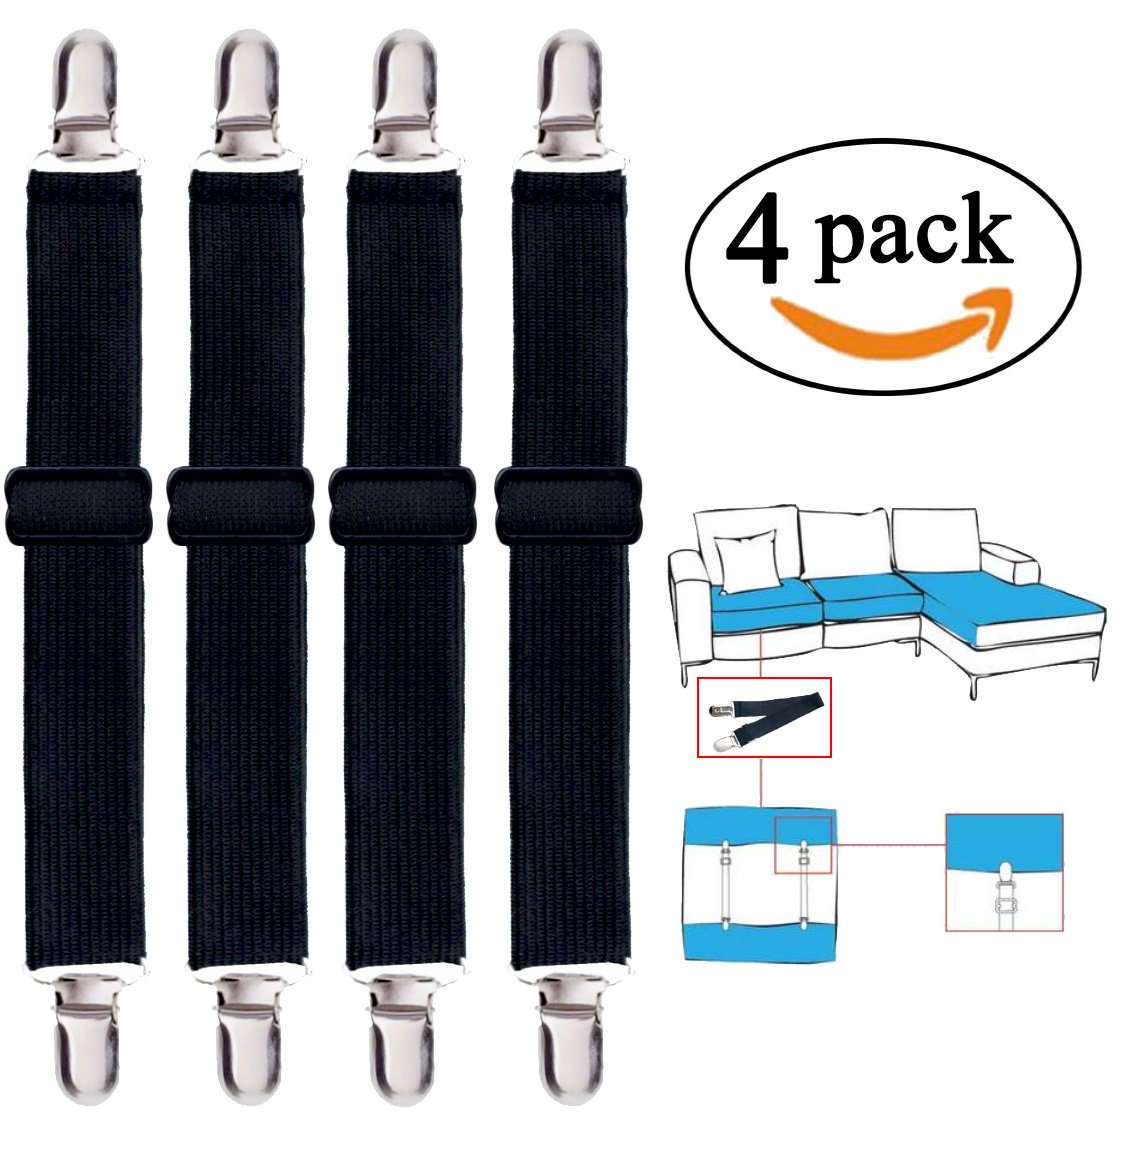 Korlon Adjustable Heavy Duty Bed Sheet (4 Pack), Cover Grippers Suspenders  Holder Band Straps Clips Fasteners, Black [B01GKRDA5S] - $7.99 : korlon  Shop online!